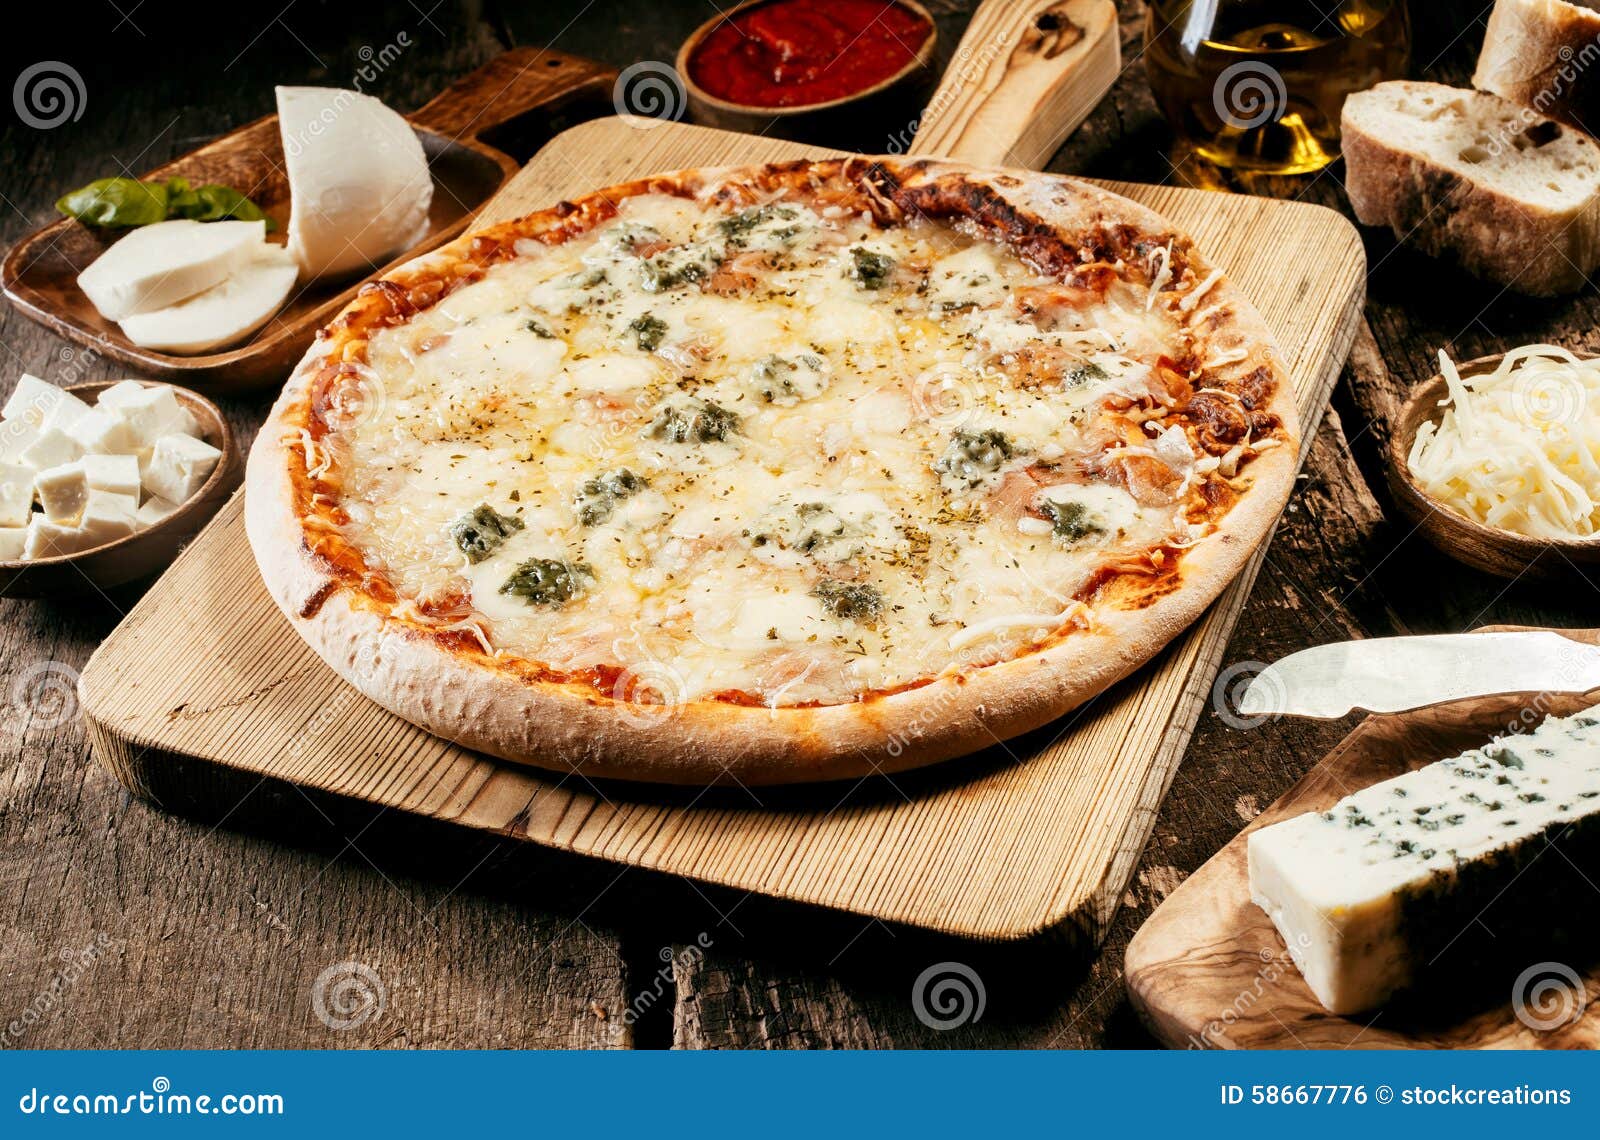 Preparing A Four Cheeses Italian Pizza Stock Photo Image 58667776